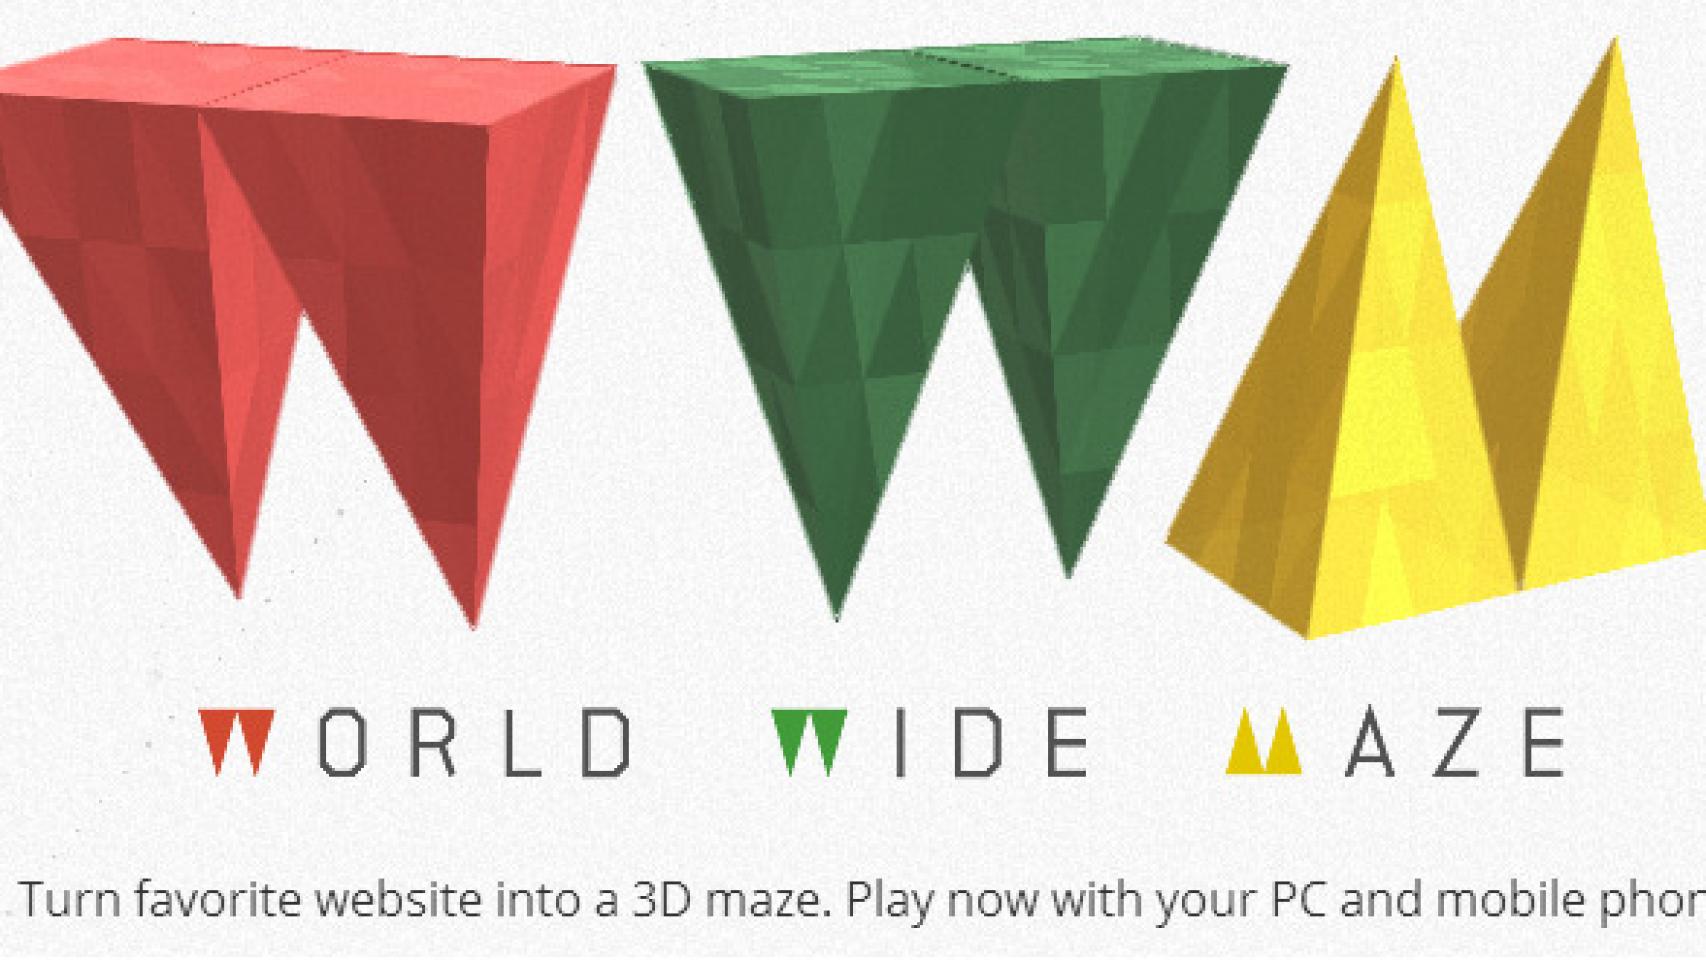 World Wide Maze: Nuevo experimento de Chrome que convierte la web en un divertido pinball